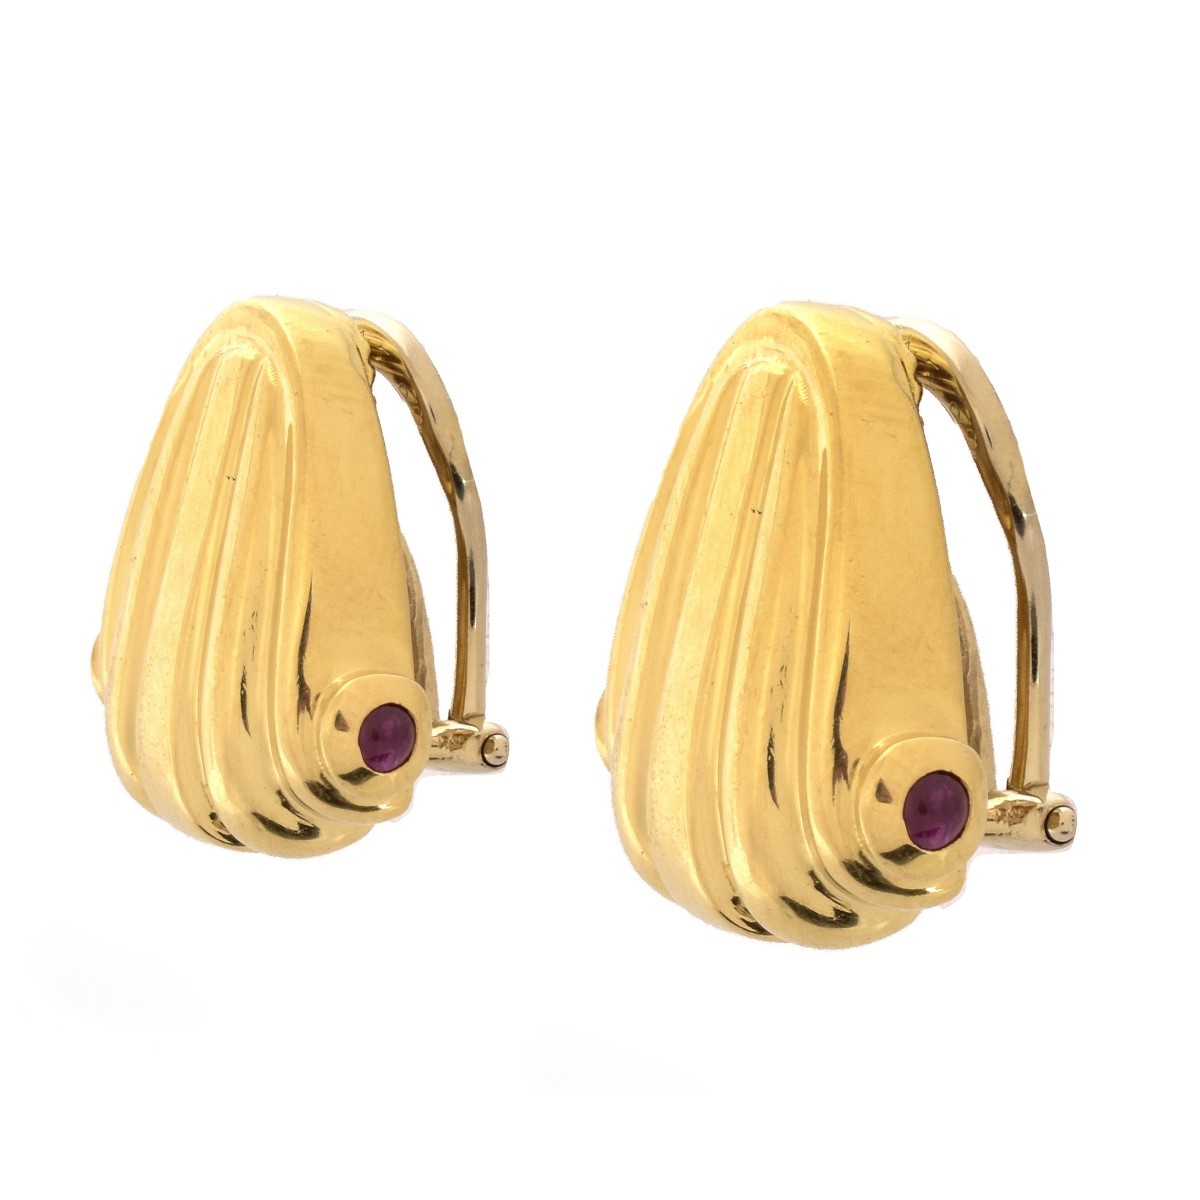 Cartier 18K and Ruby Earrings